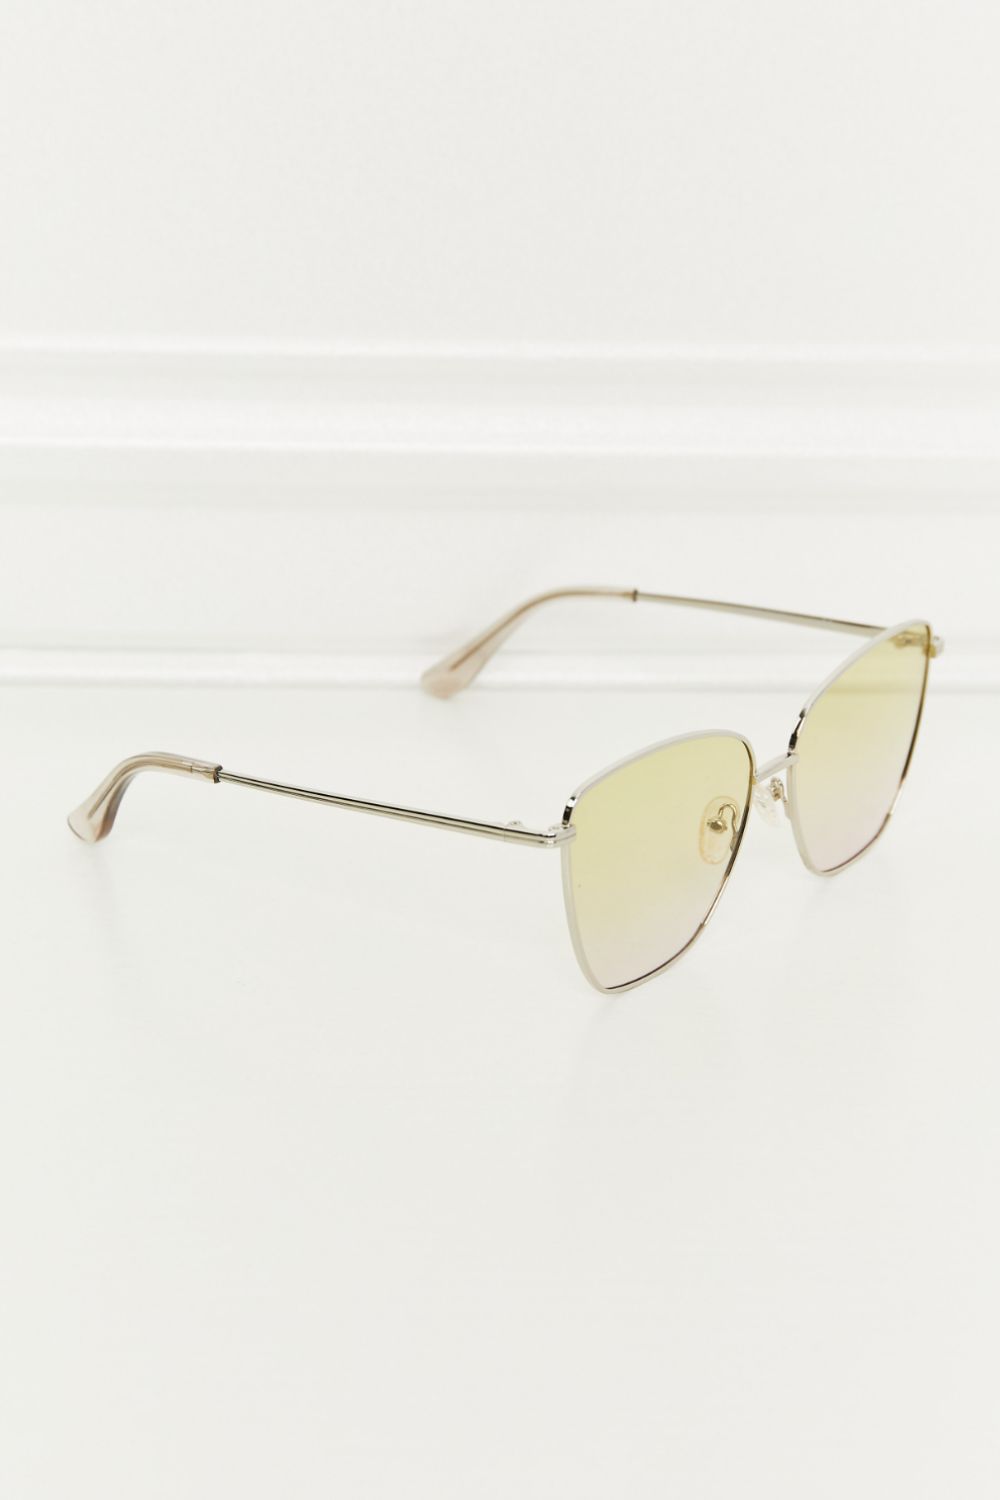 Metal Frame Full Rim Sunglasses - The Fashion Unicorn